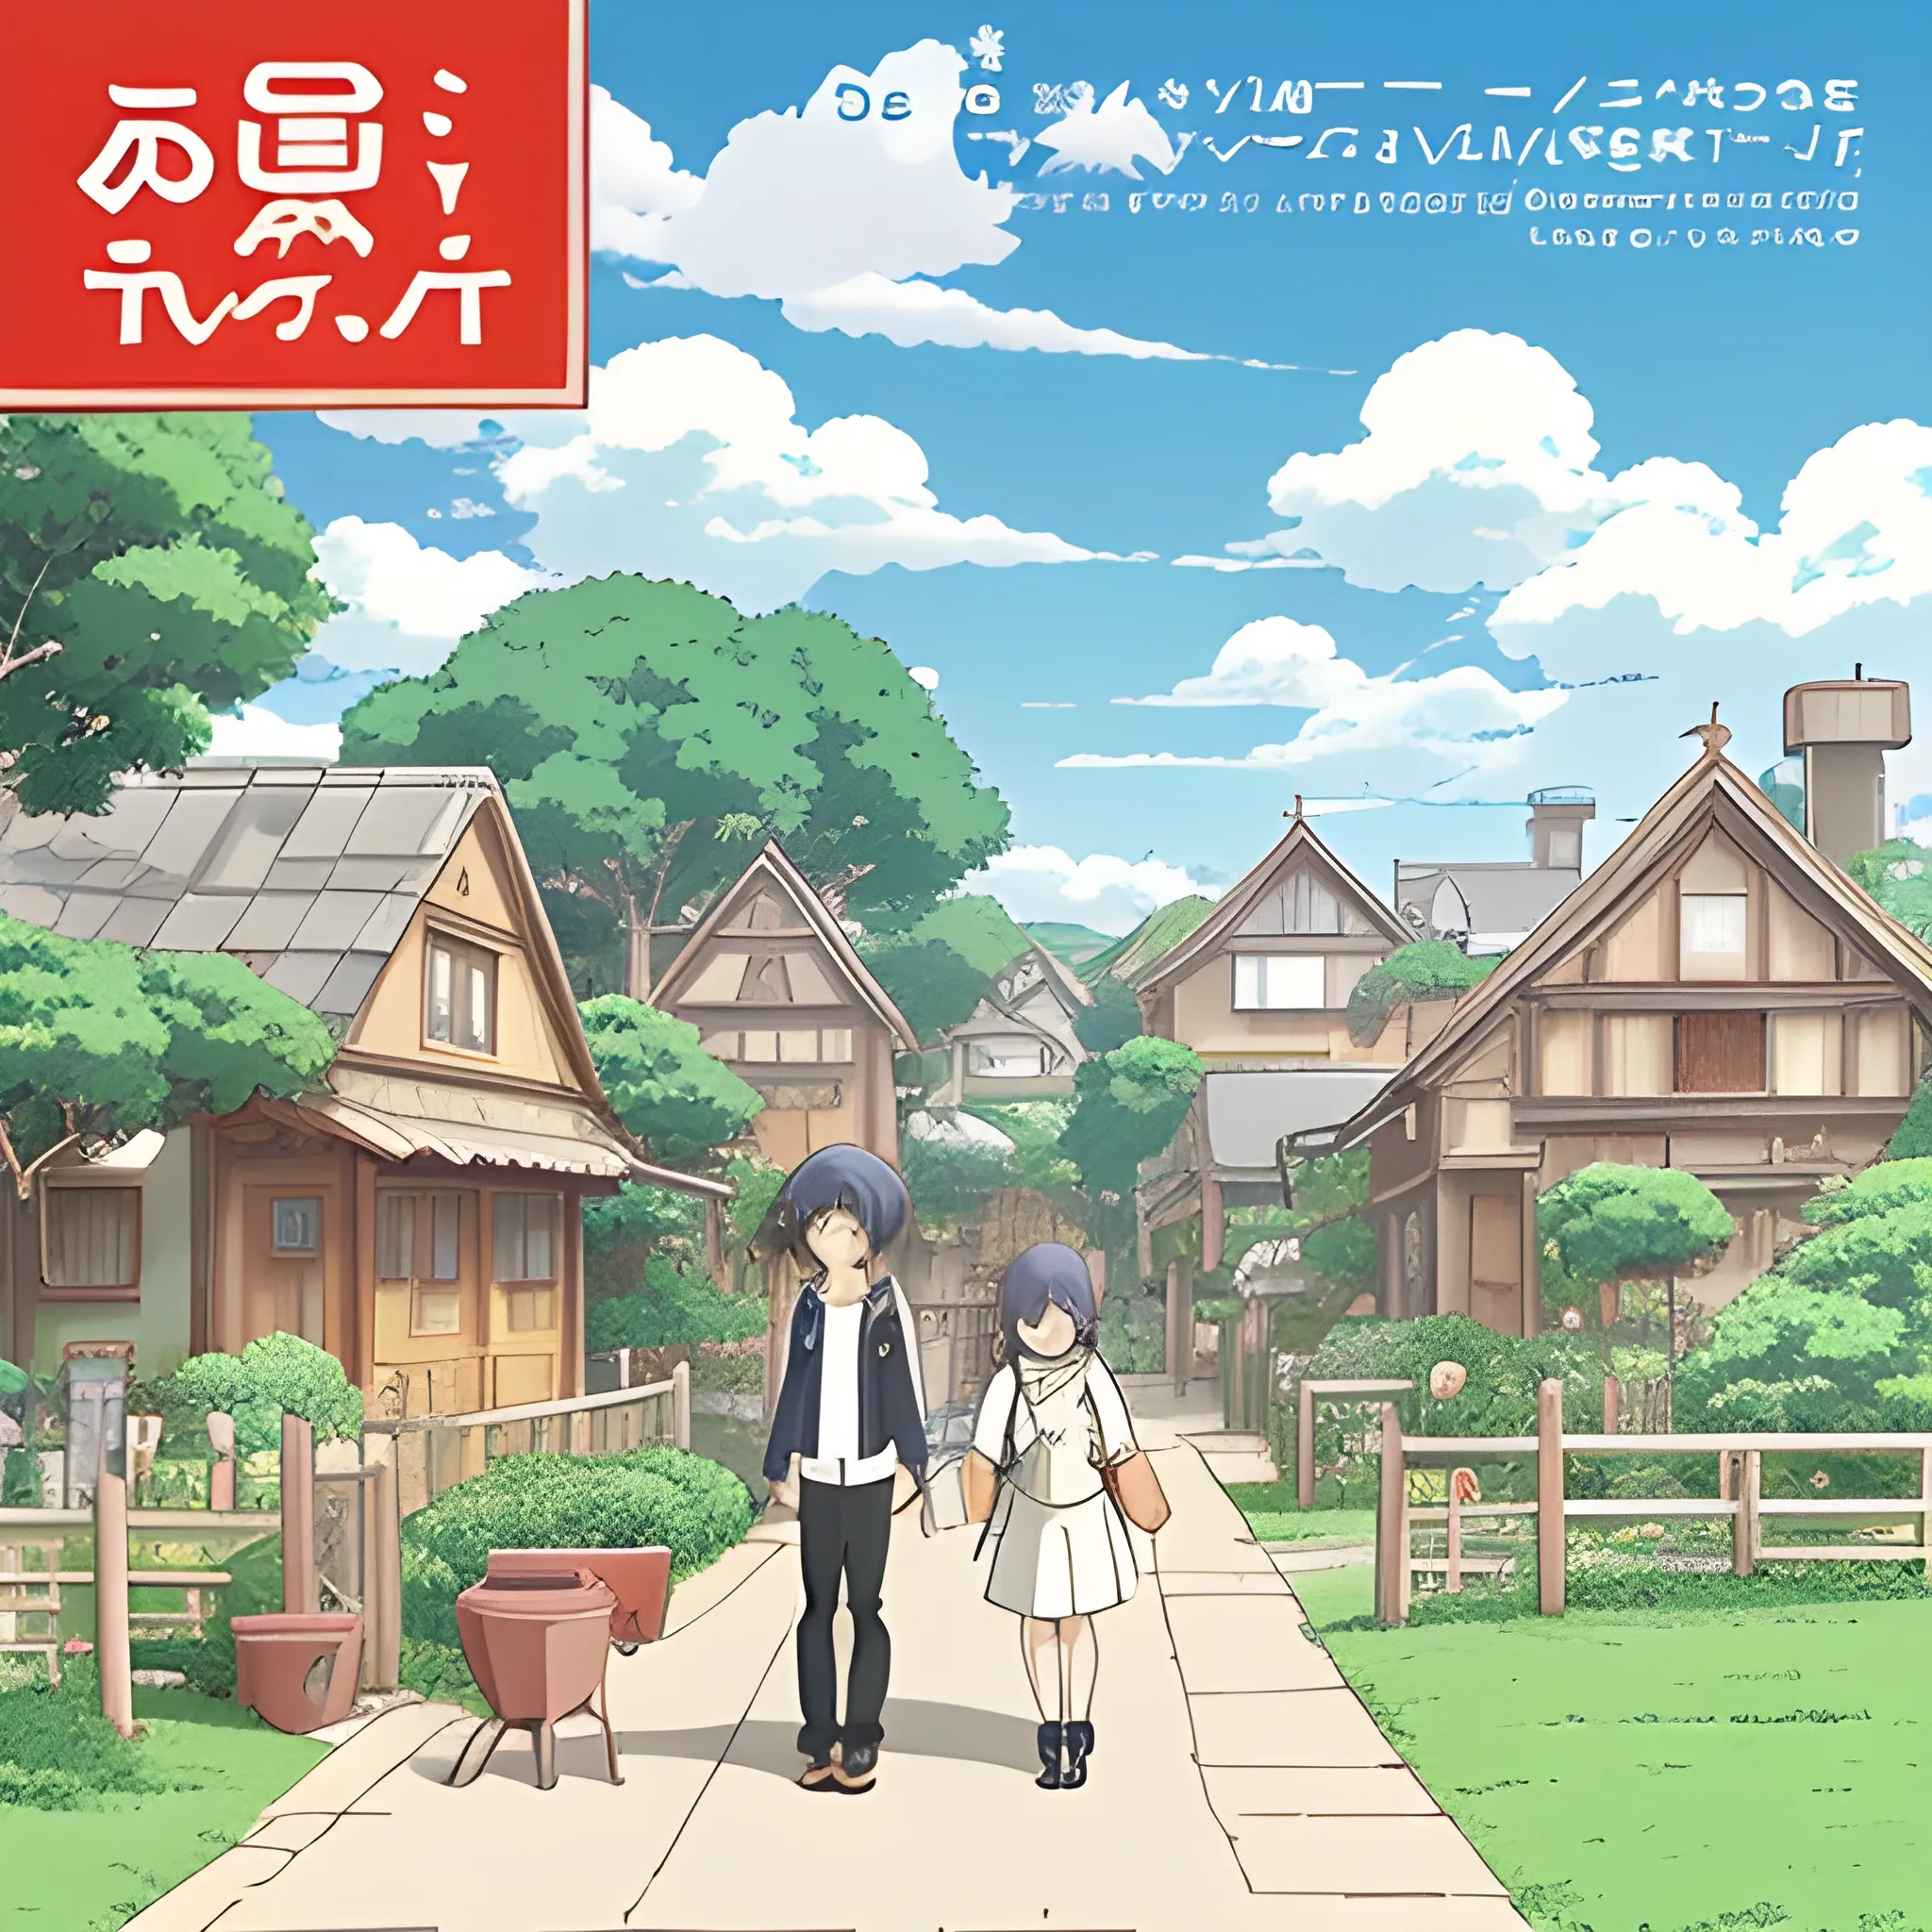 Anime Key Visual Make a Studio Ghibli-Themed Cookbook Cover - Arthub.ai